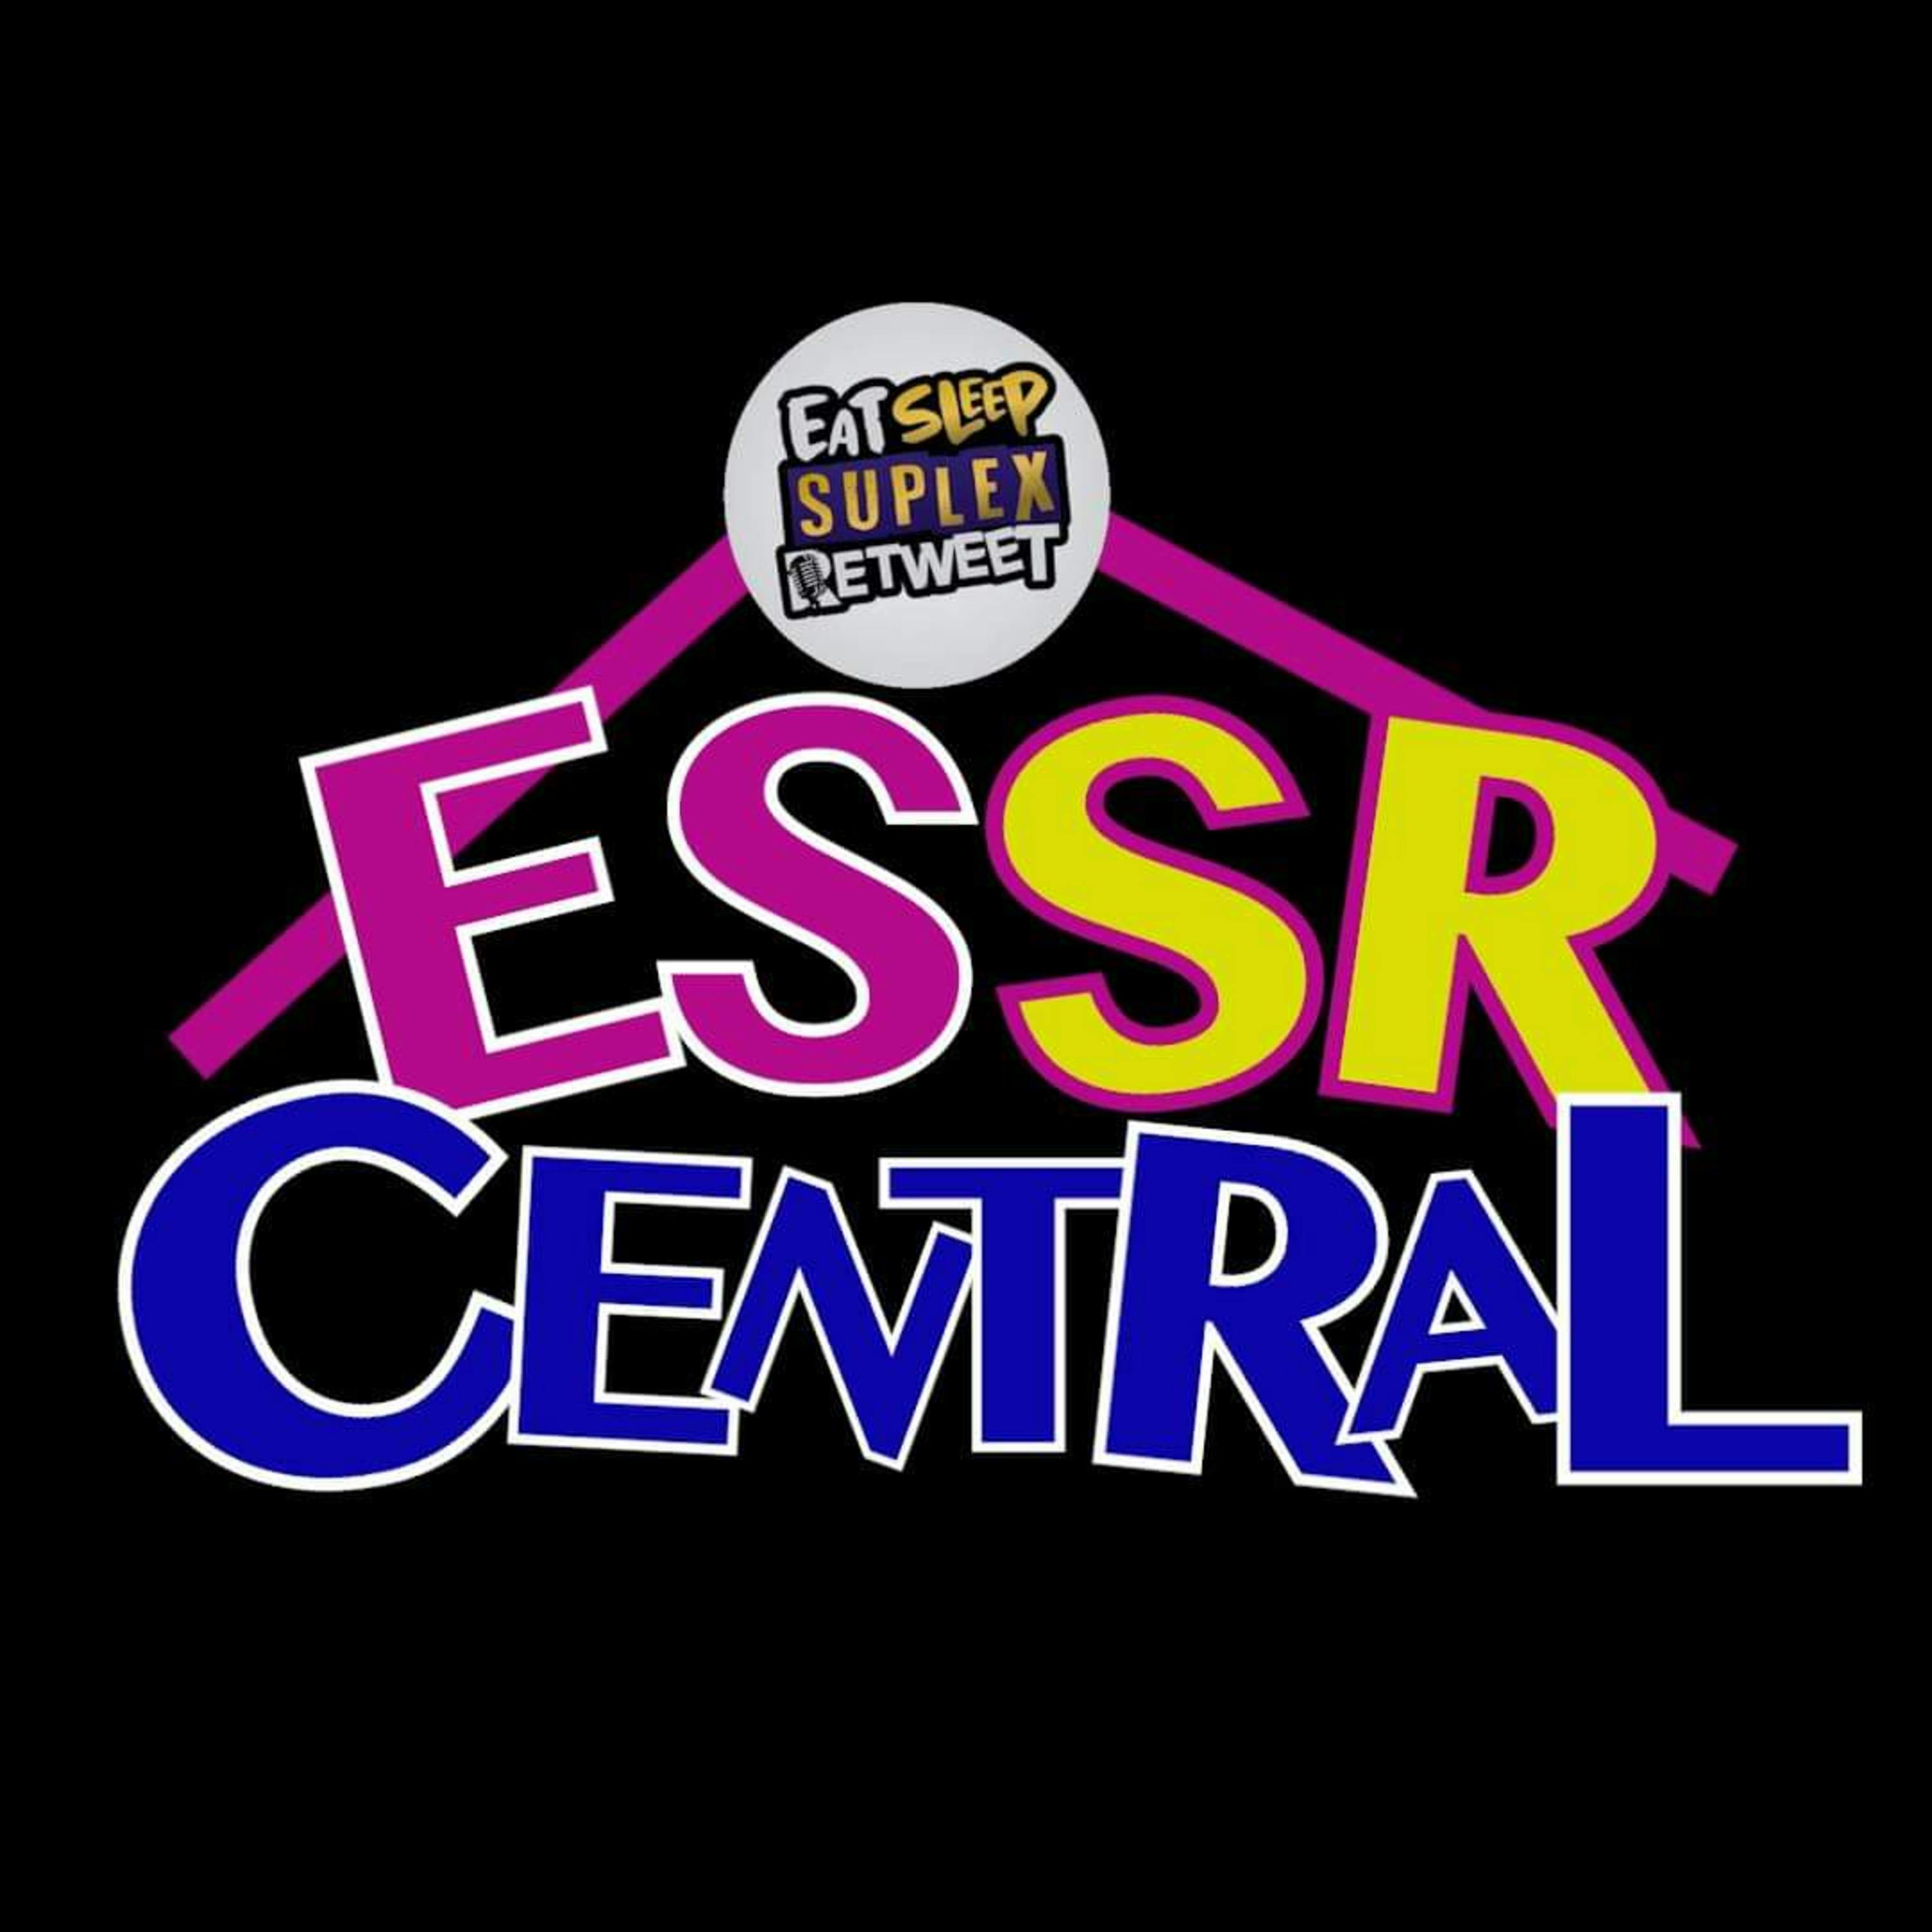 ESSR Central #104 - AEW Revolution & the Road to WrestleMania